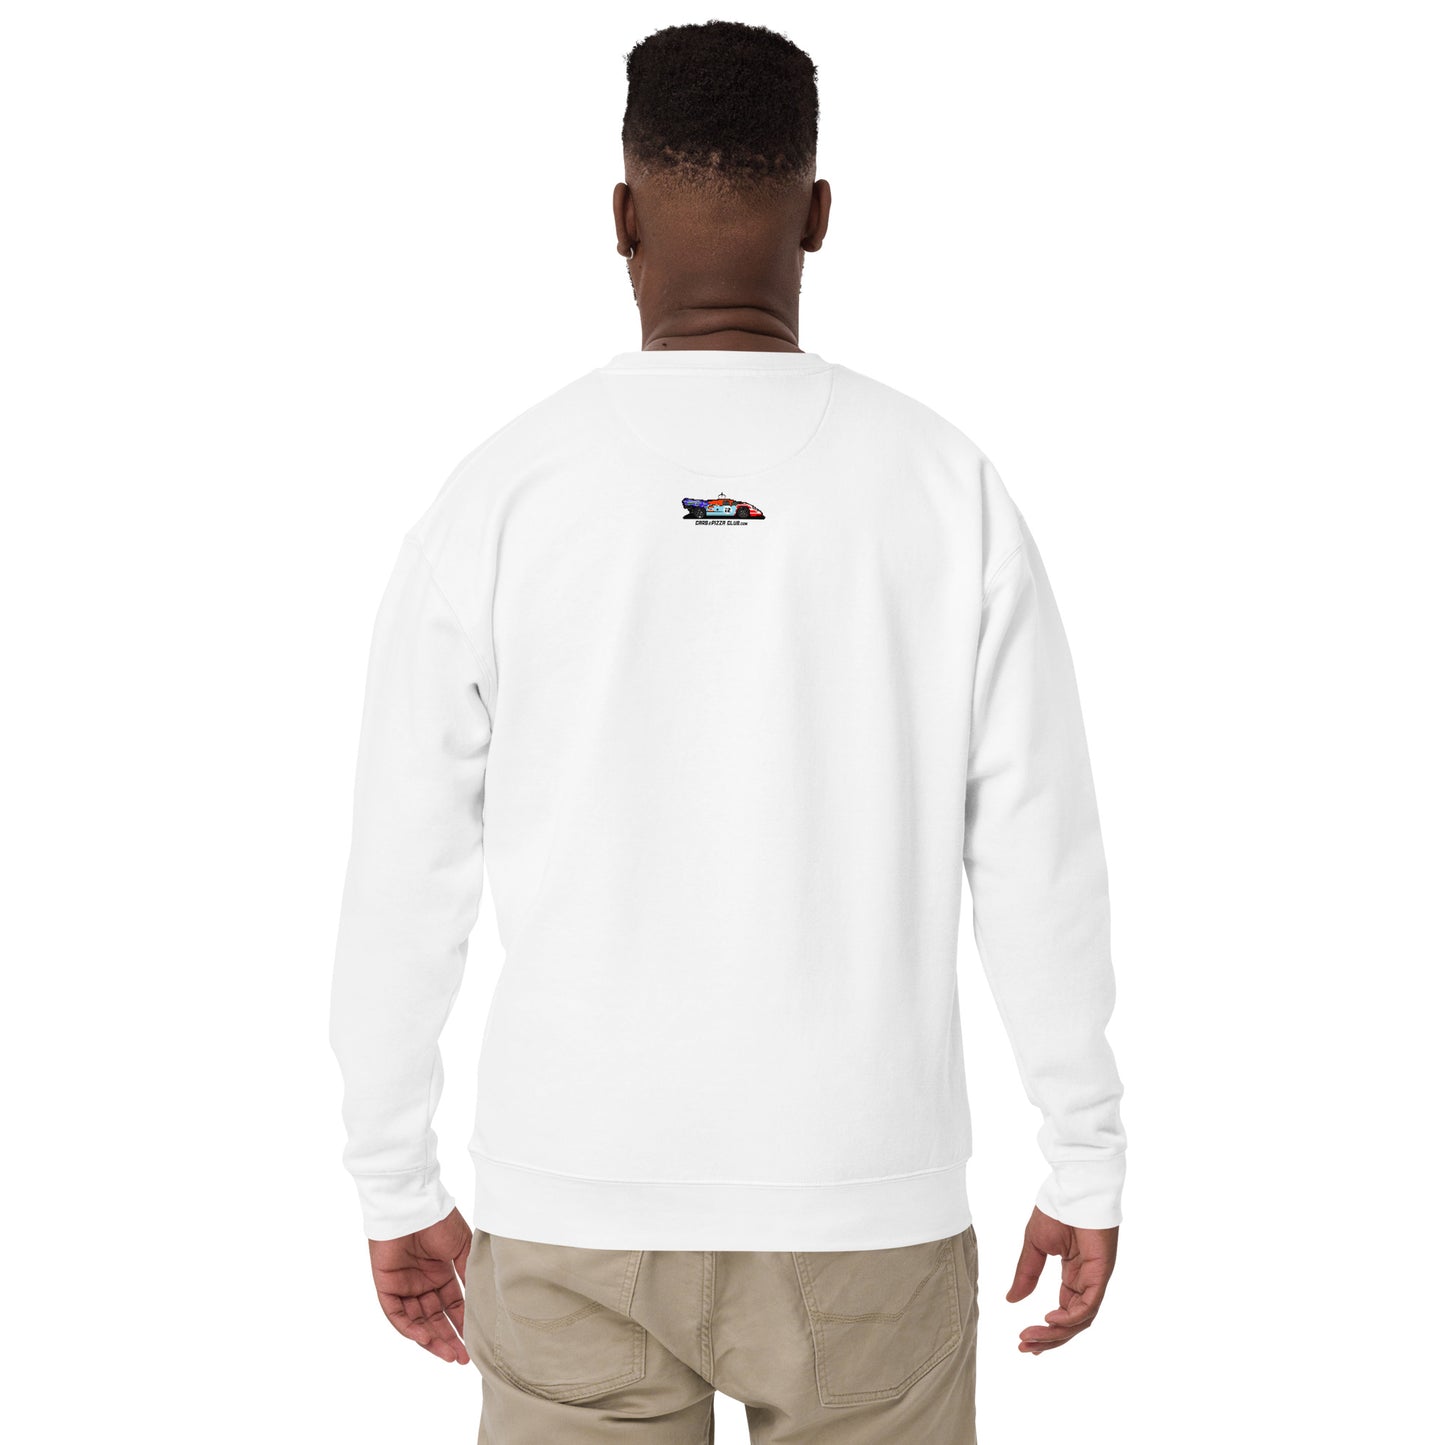 917 PixelArt Unisex Sweatshirt